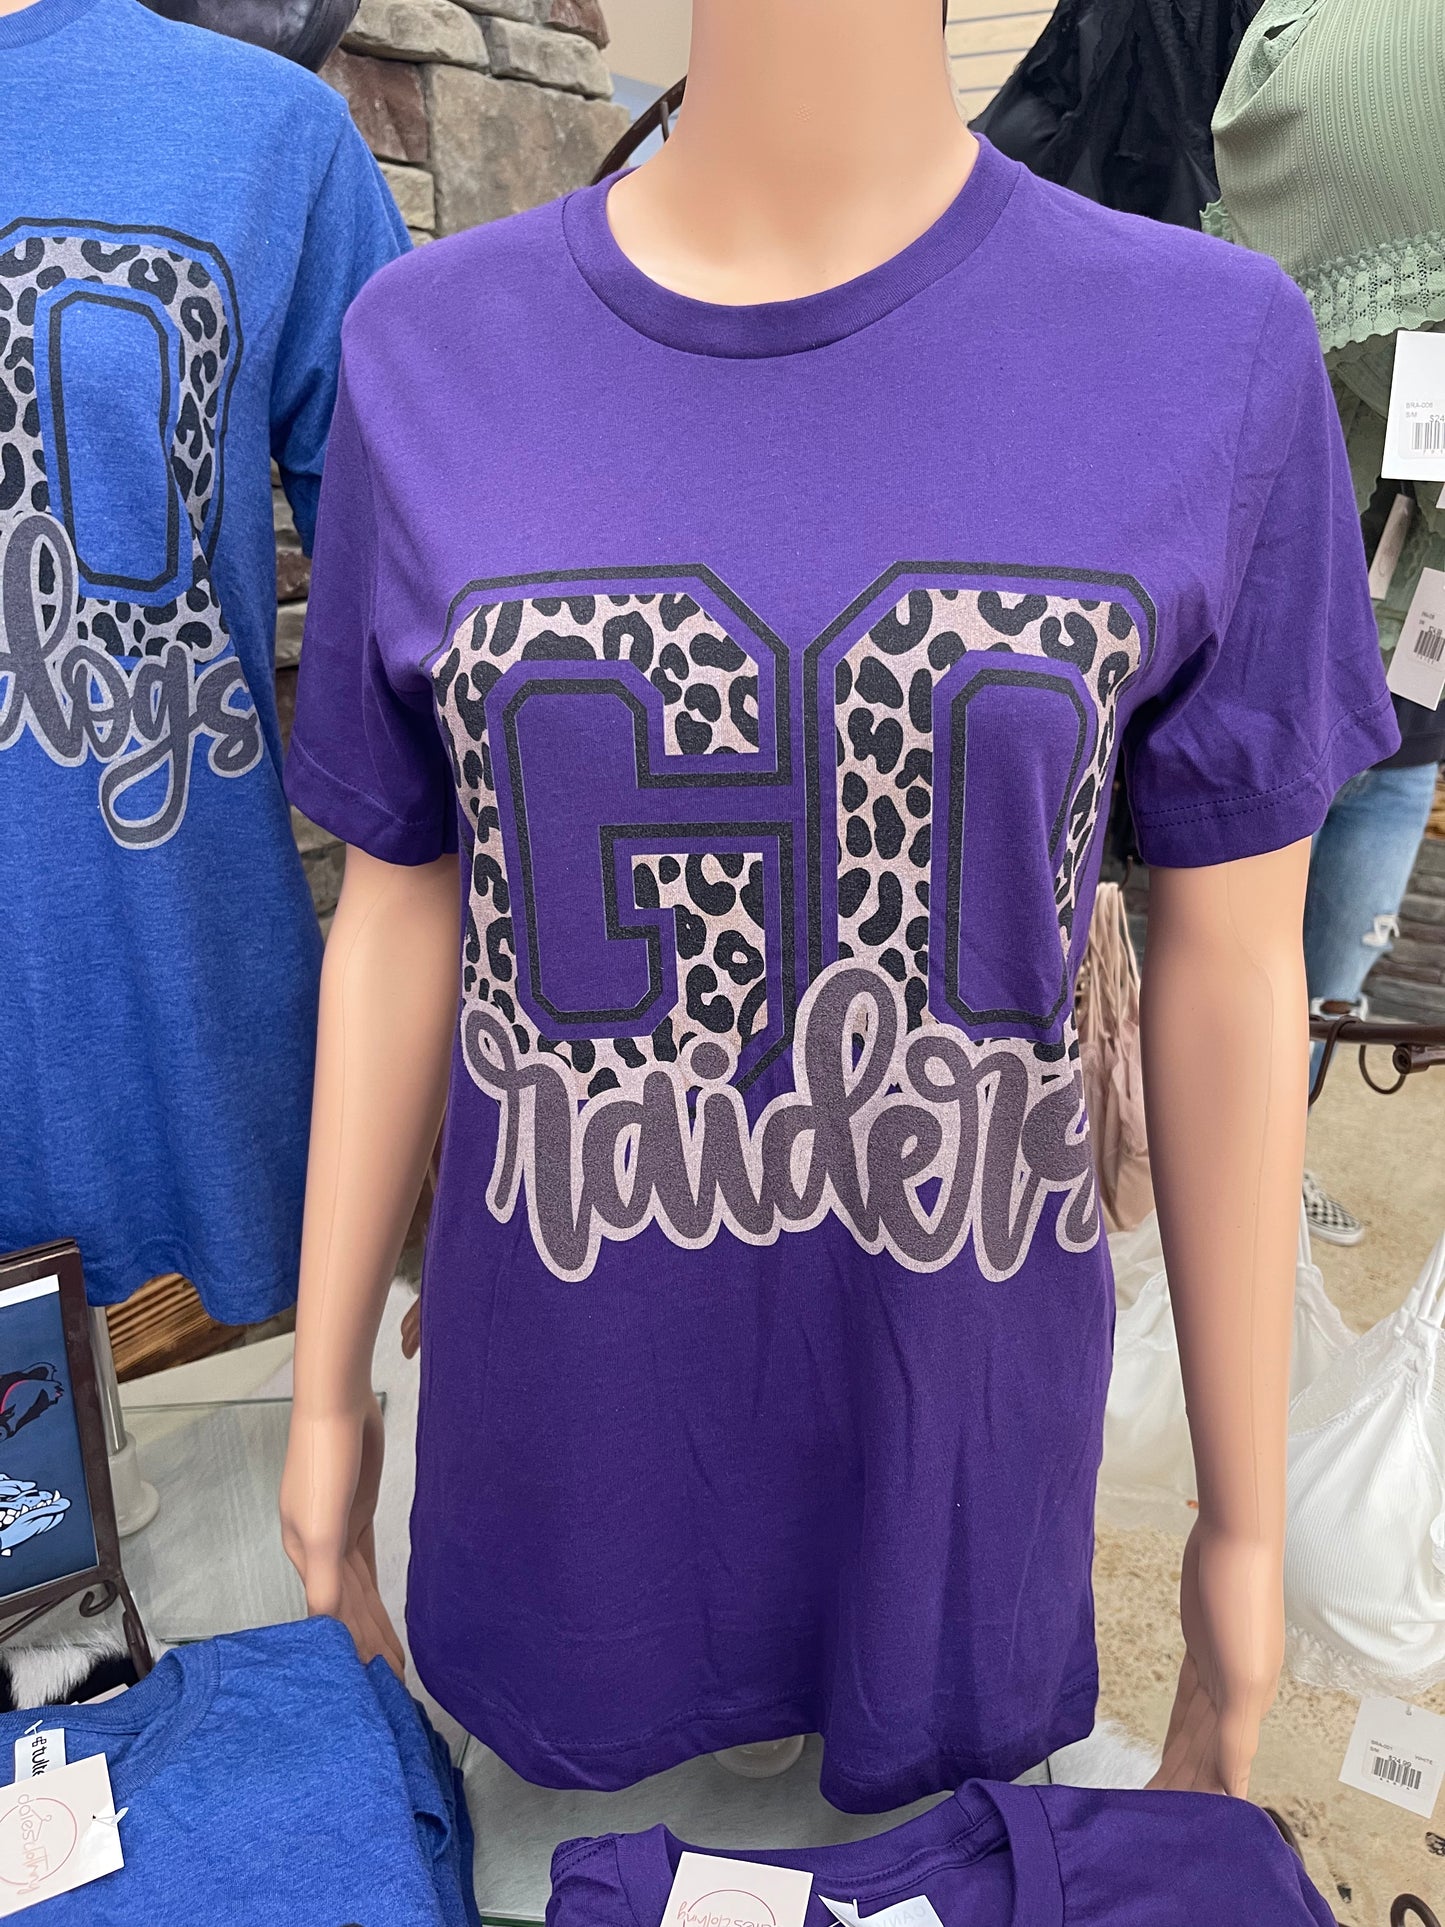 Go Raiders Youth Purple School Mascot Graphic Tee